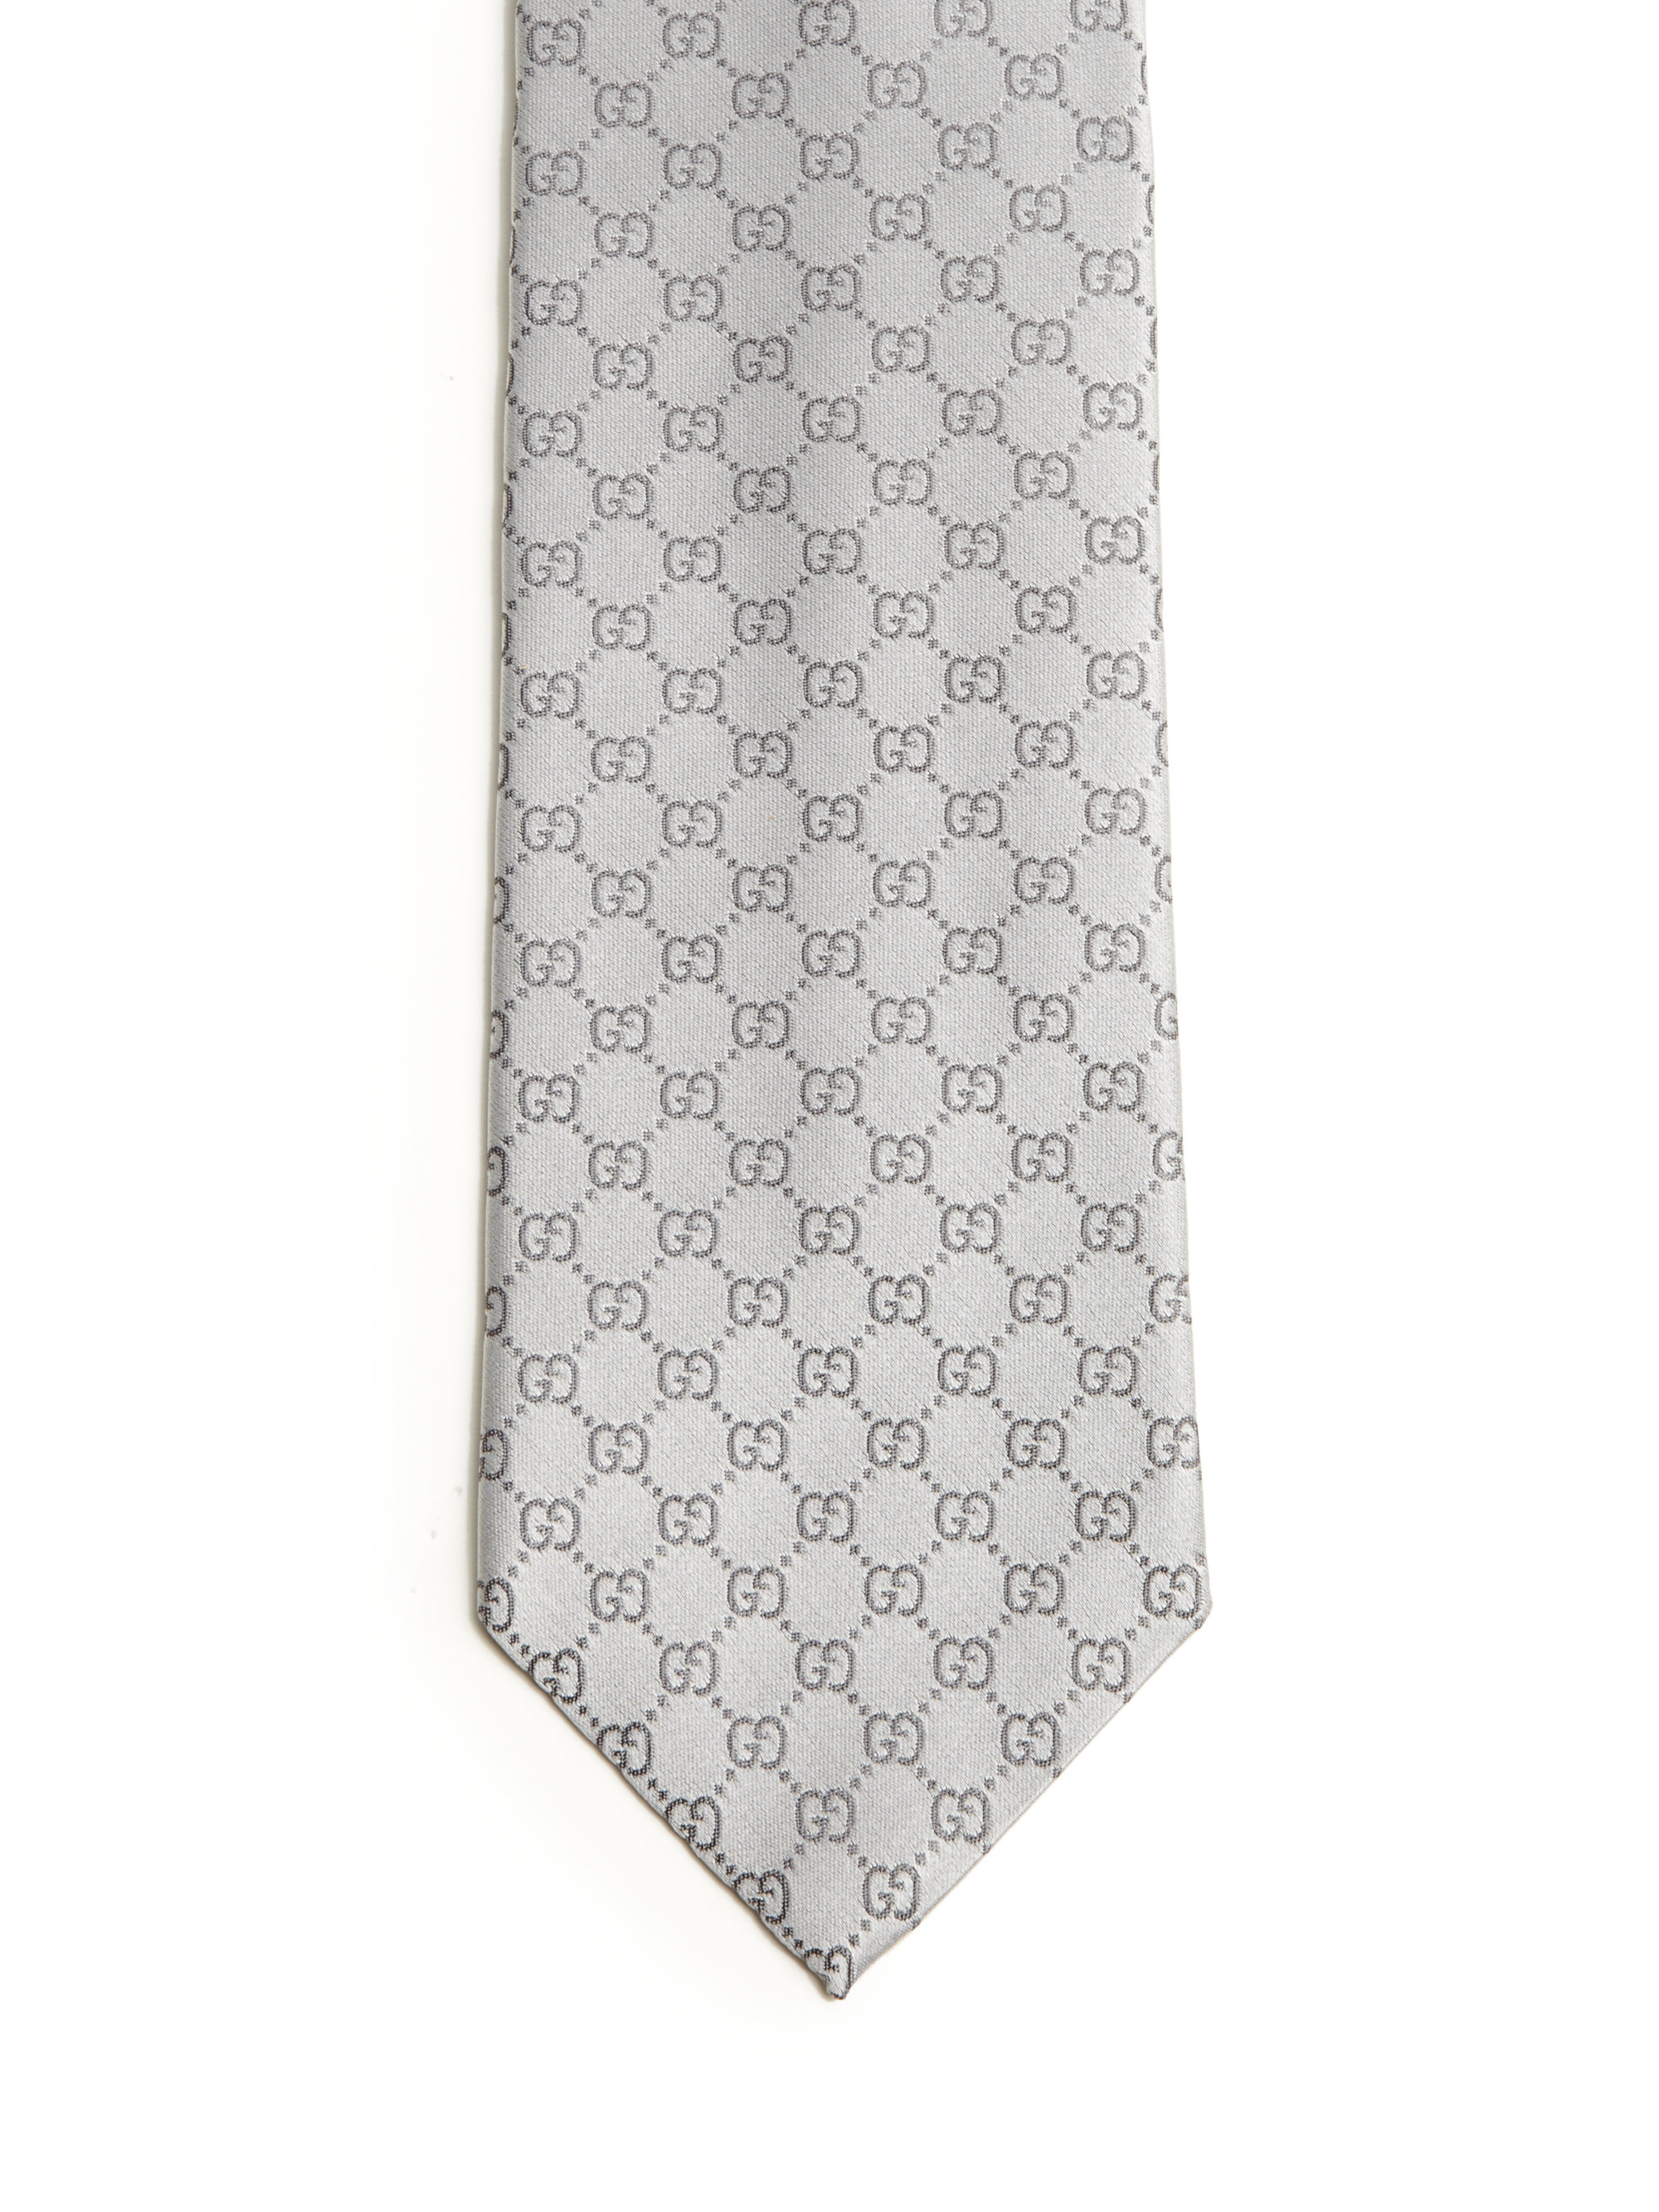 Gucci Silver Monogrammed Silk Jacquard Tie in Metallic for Men - Lyst